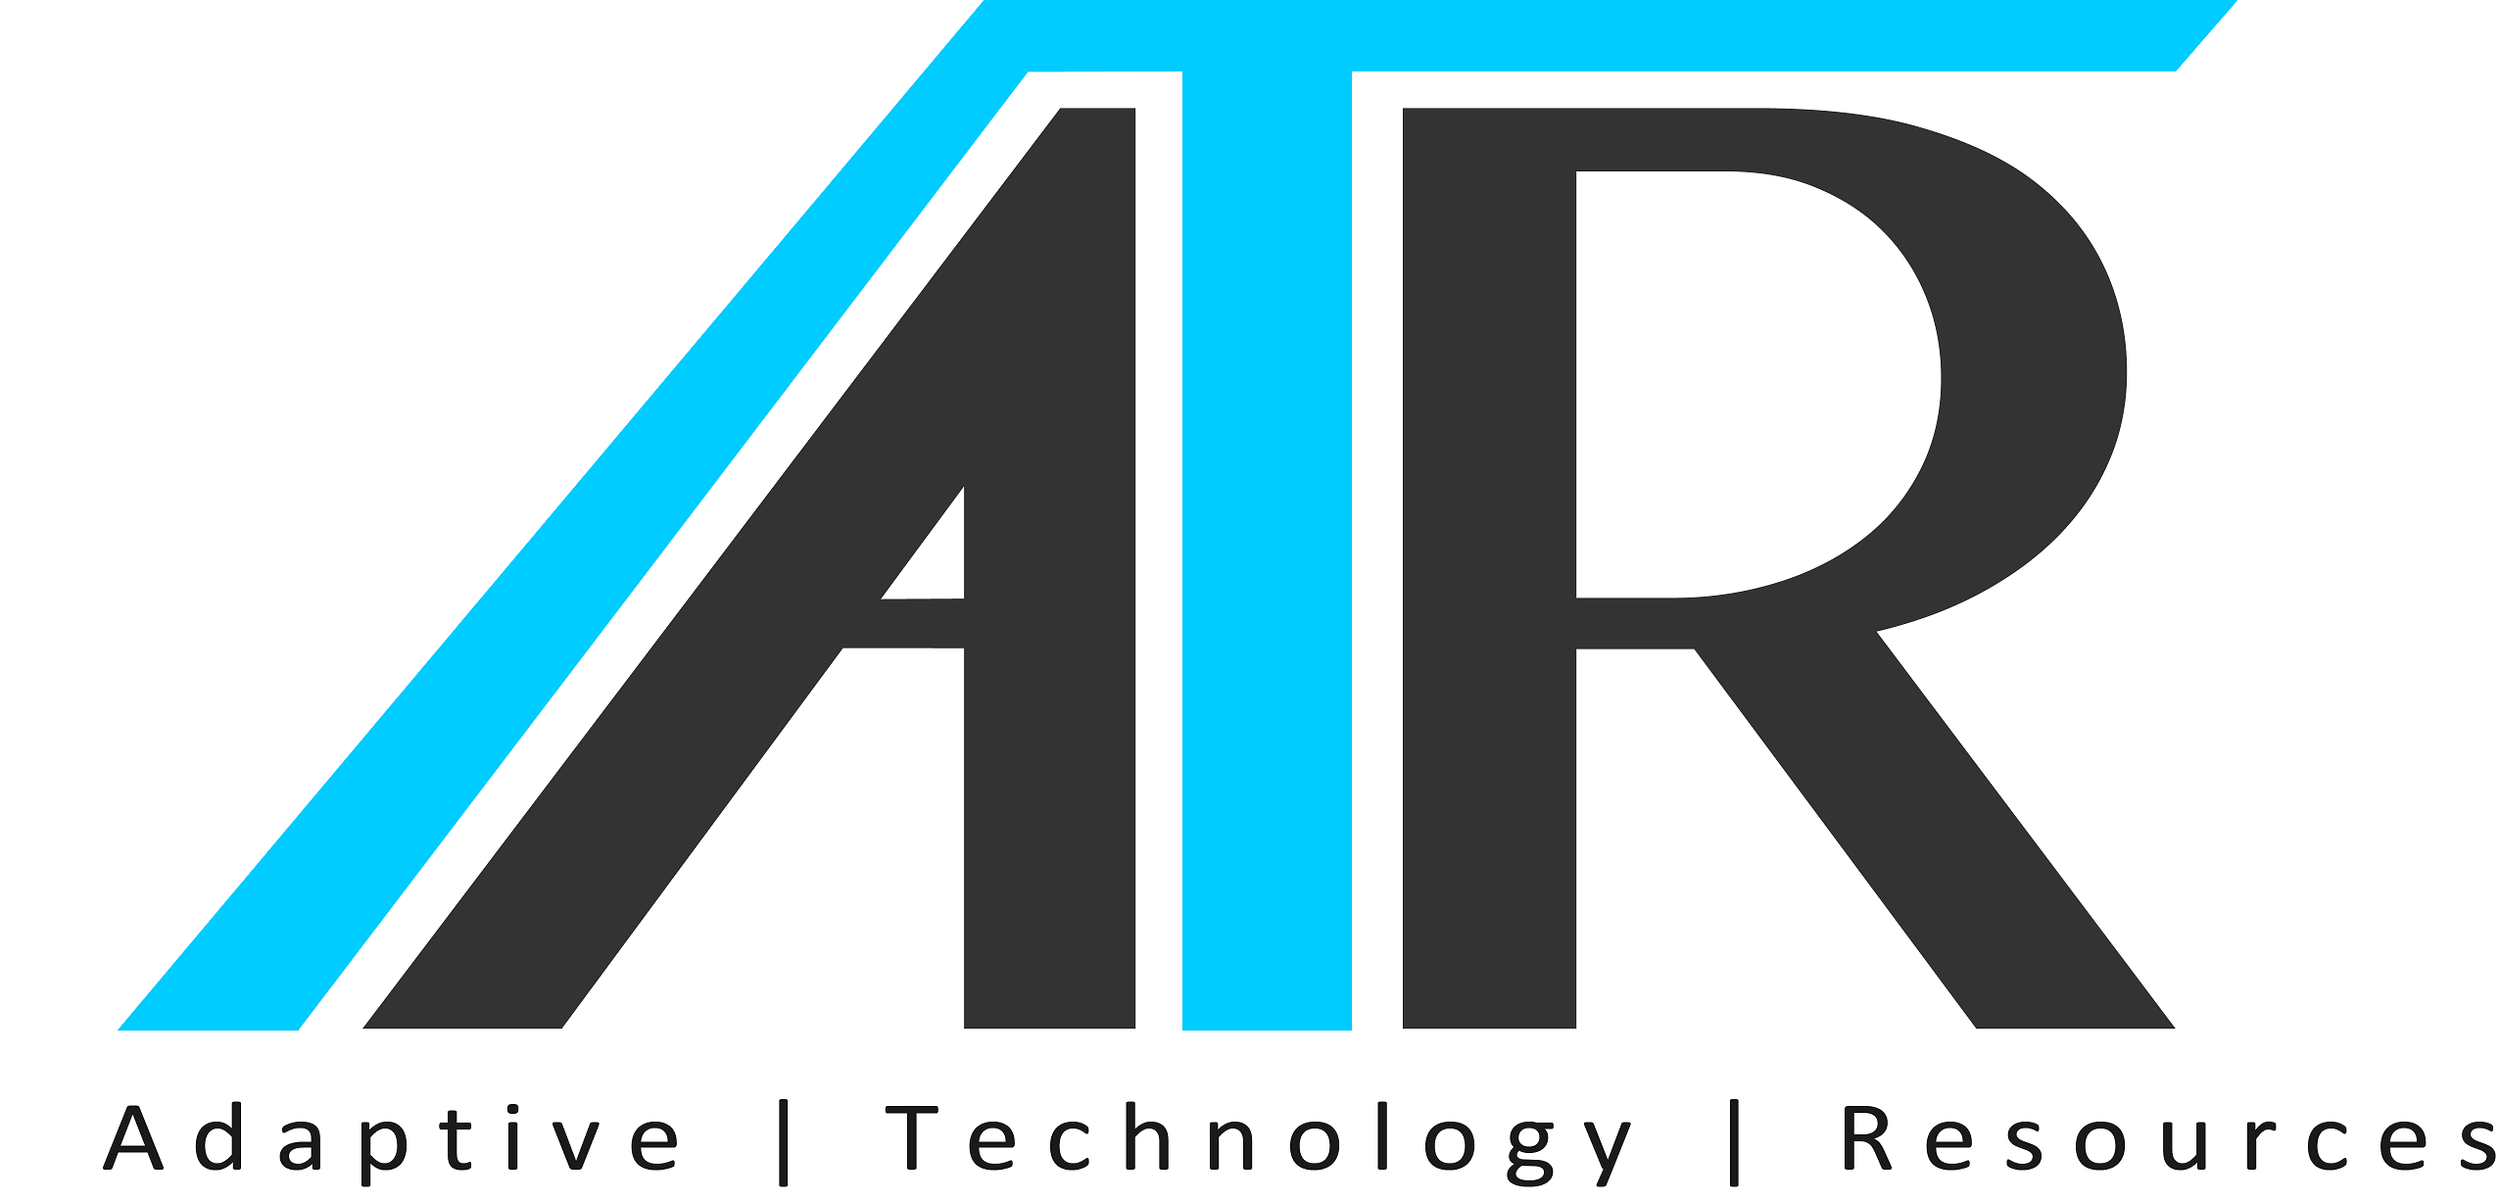 ATR logo 2022.png